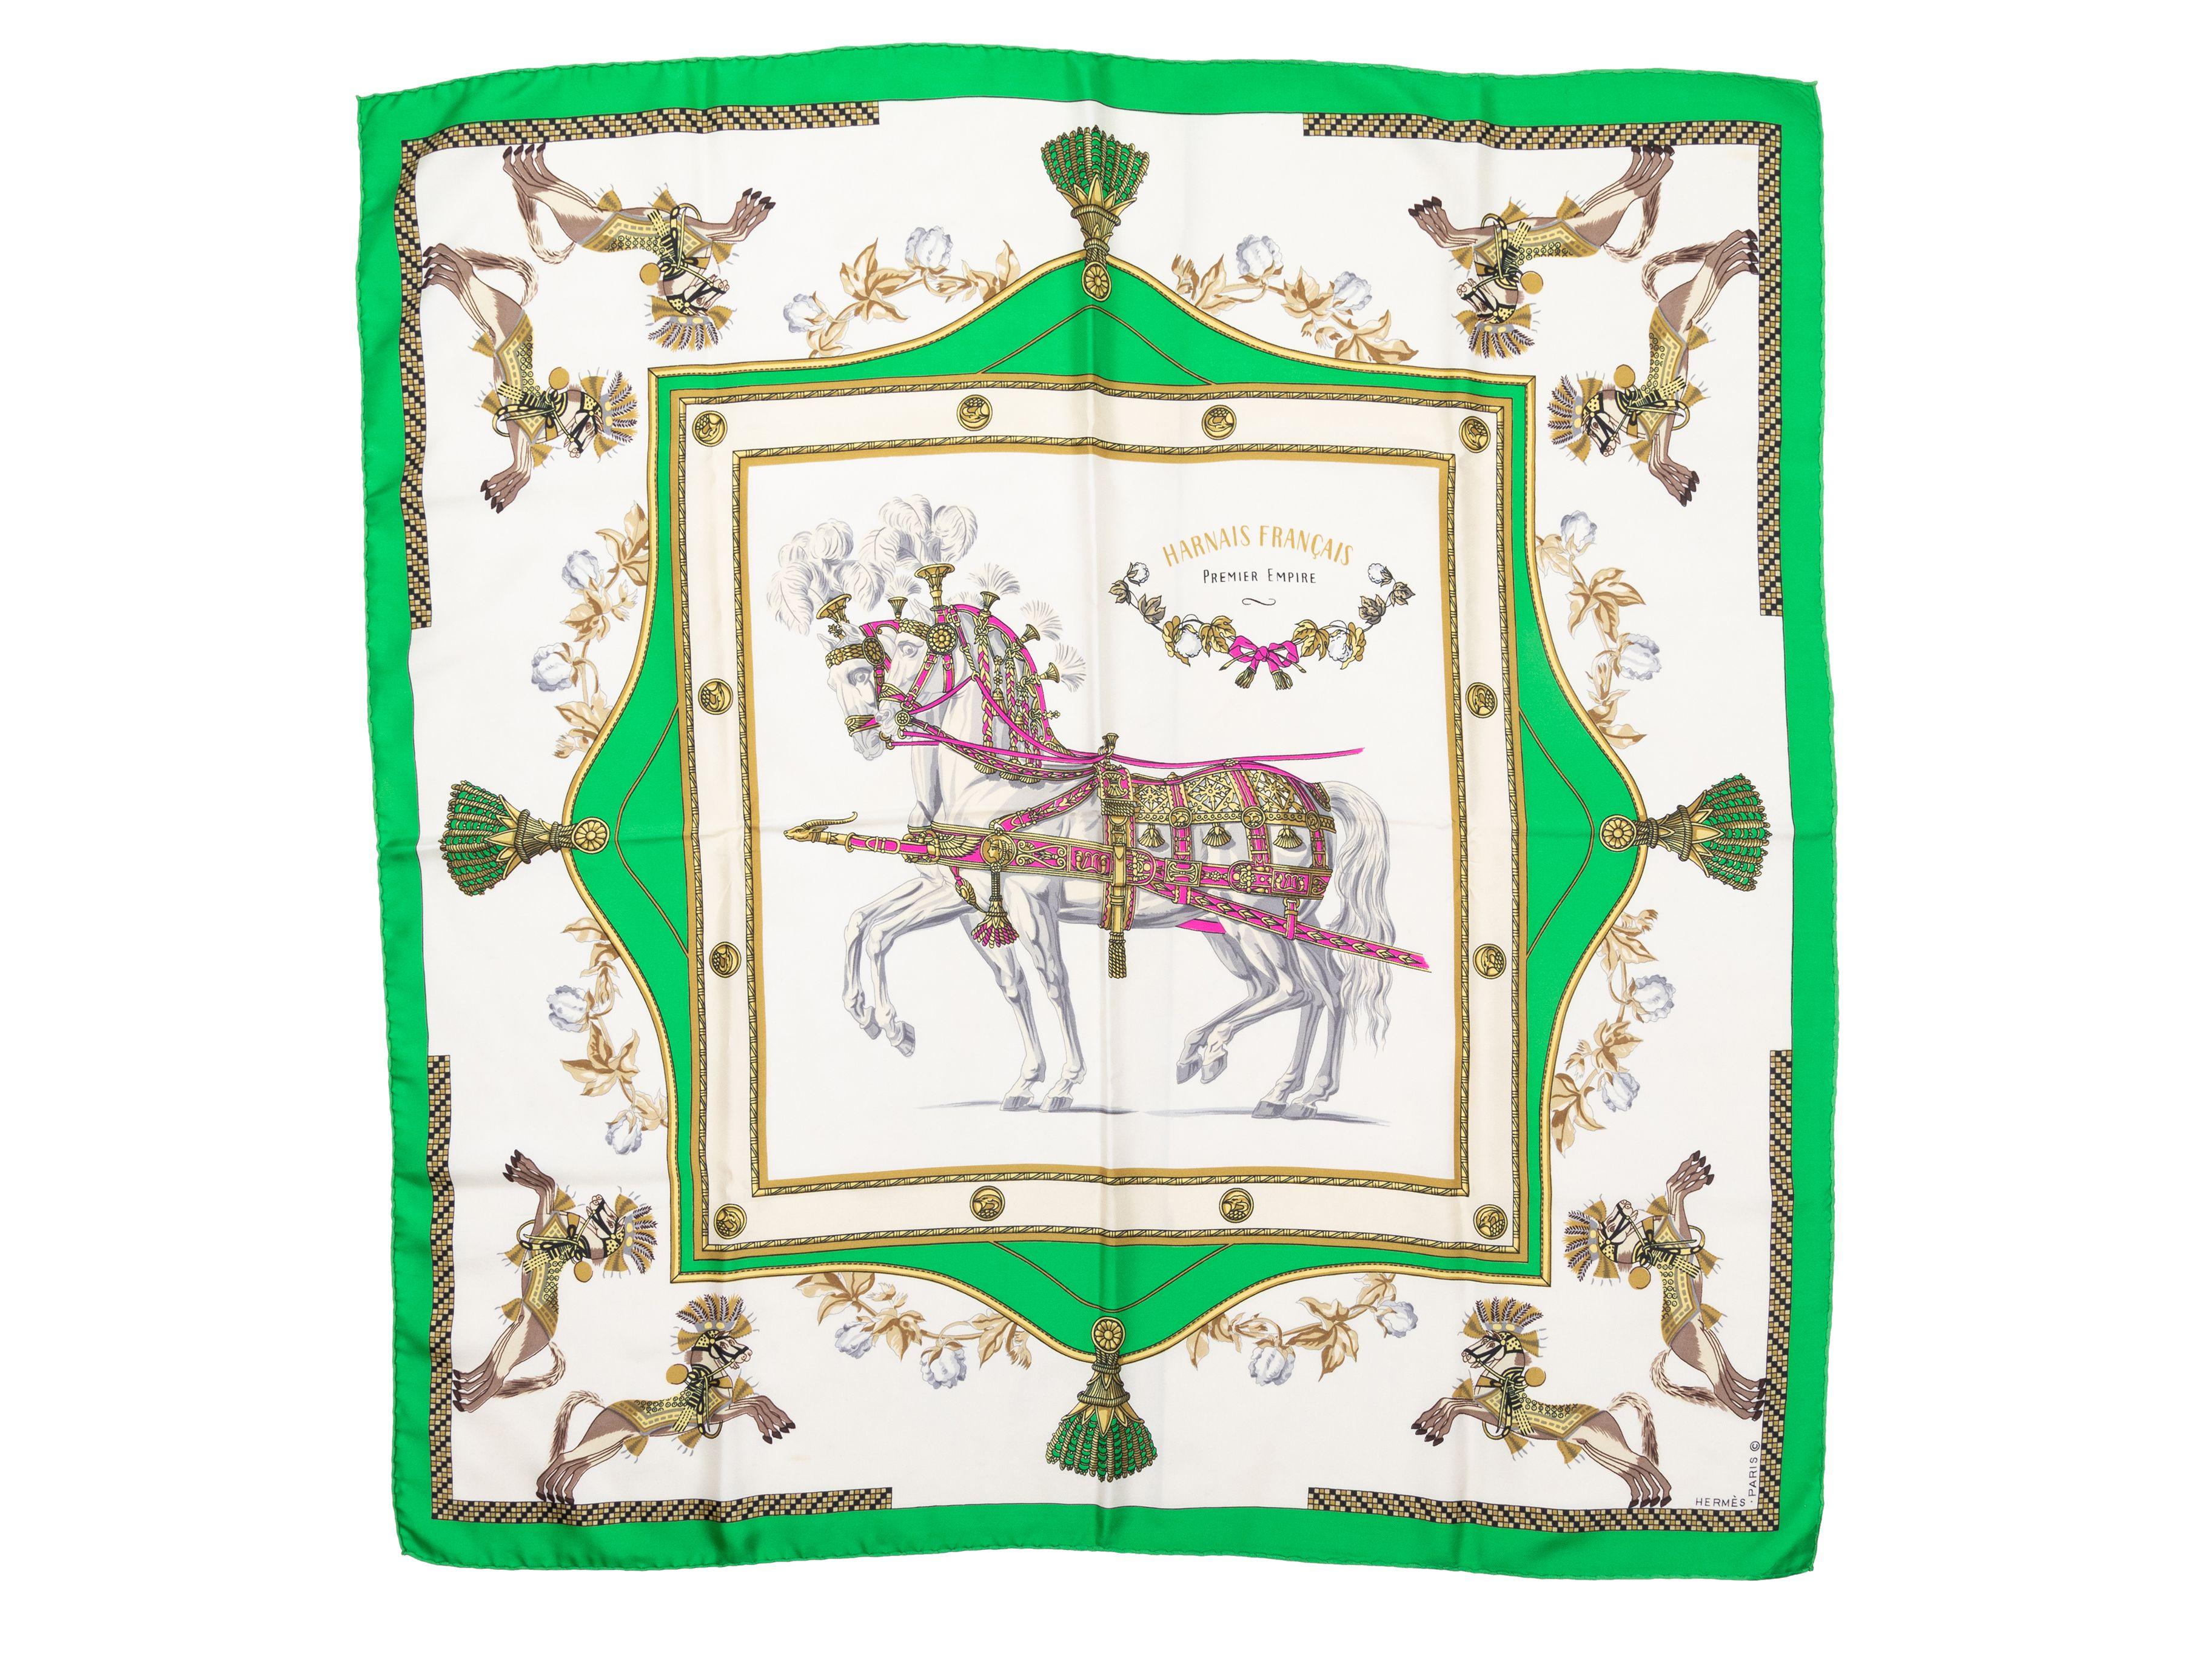 Product Details: White and multicolor silk Harnais Francais Premier Empire motif print scarf by Hermes. 34.5